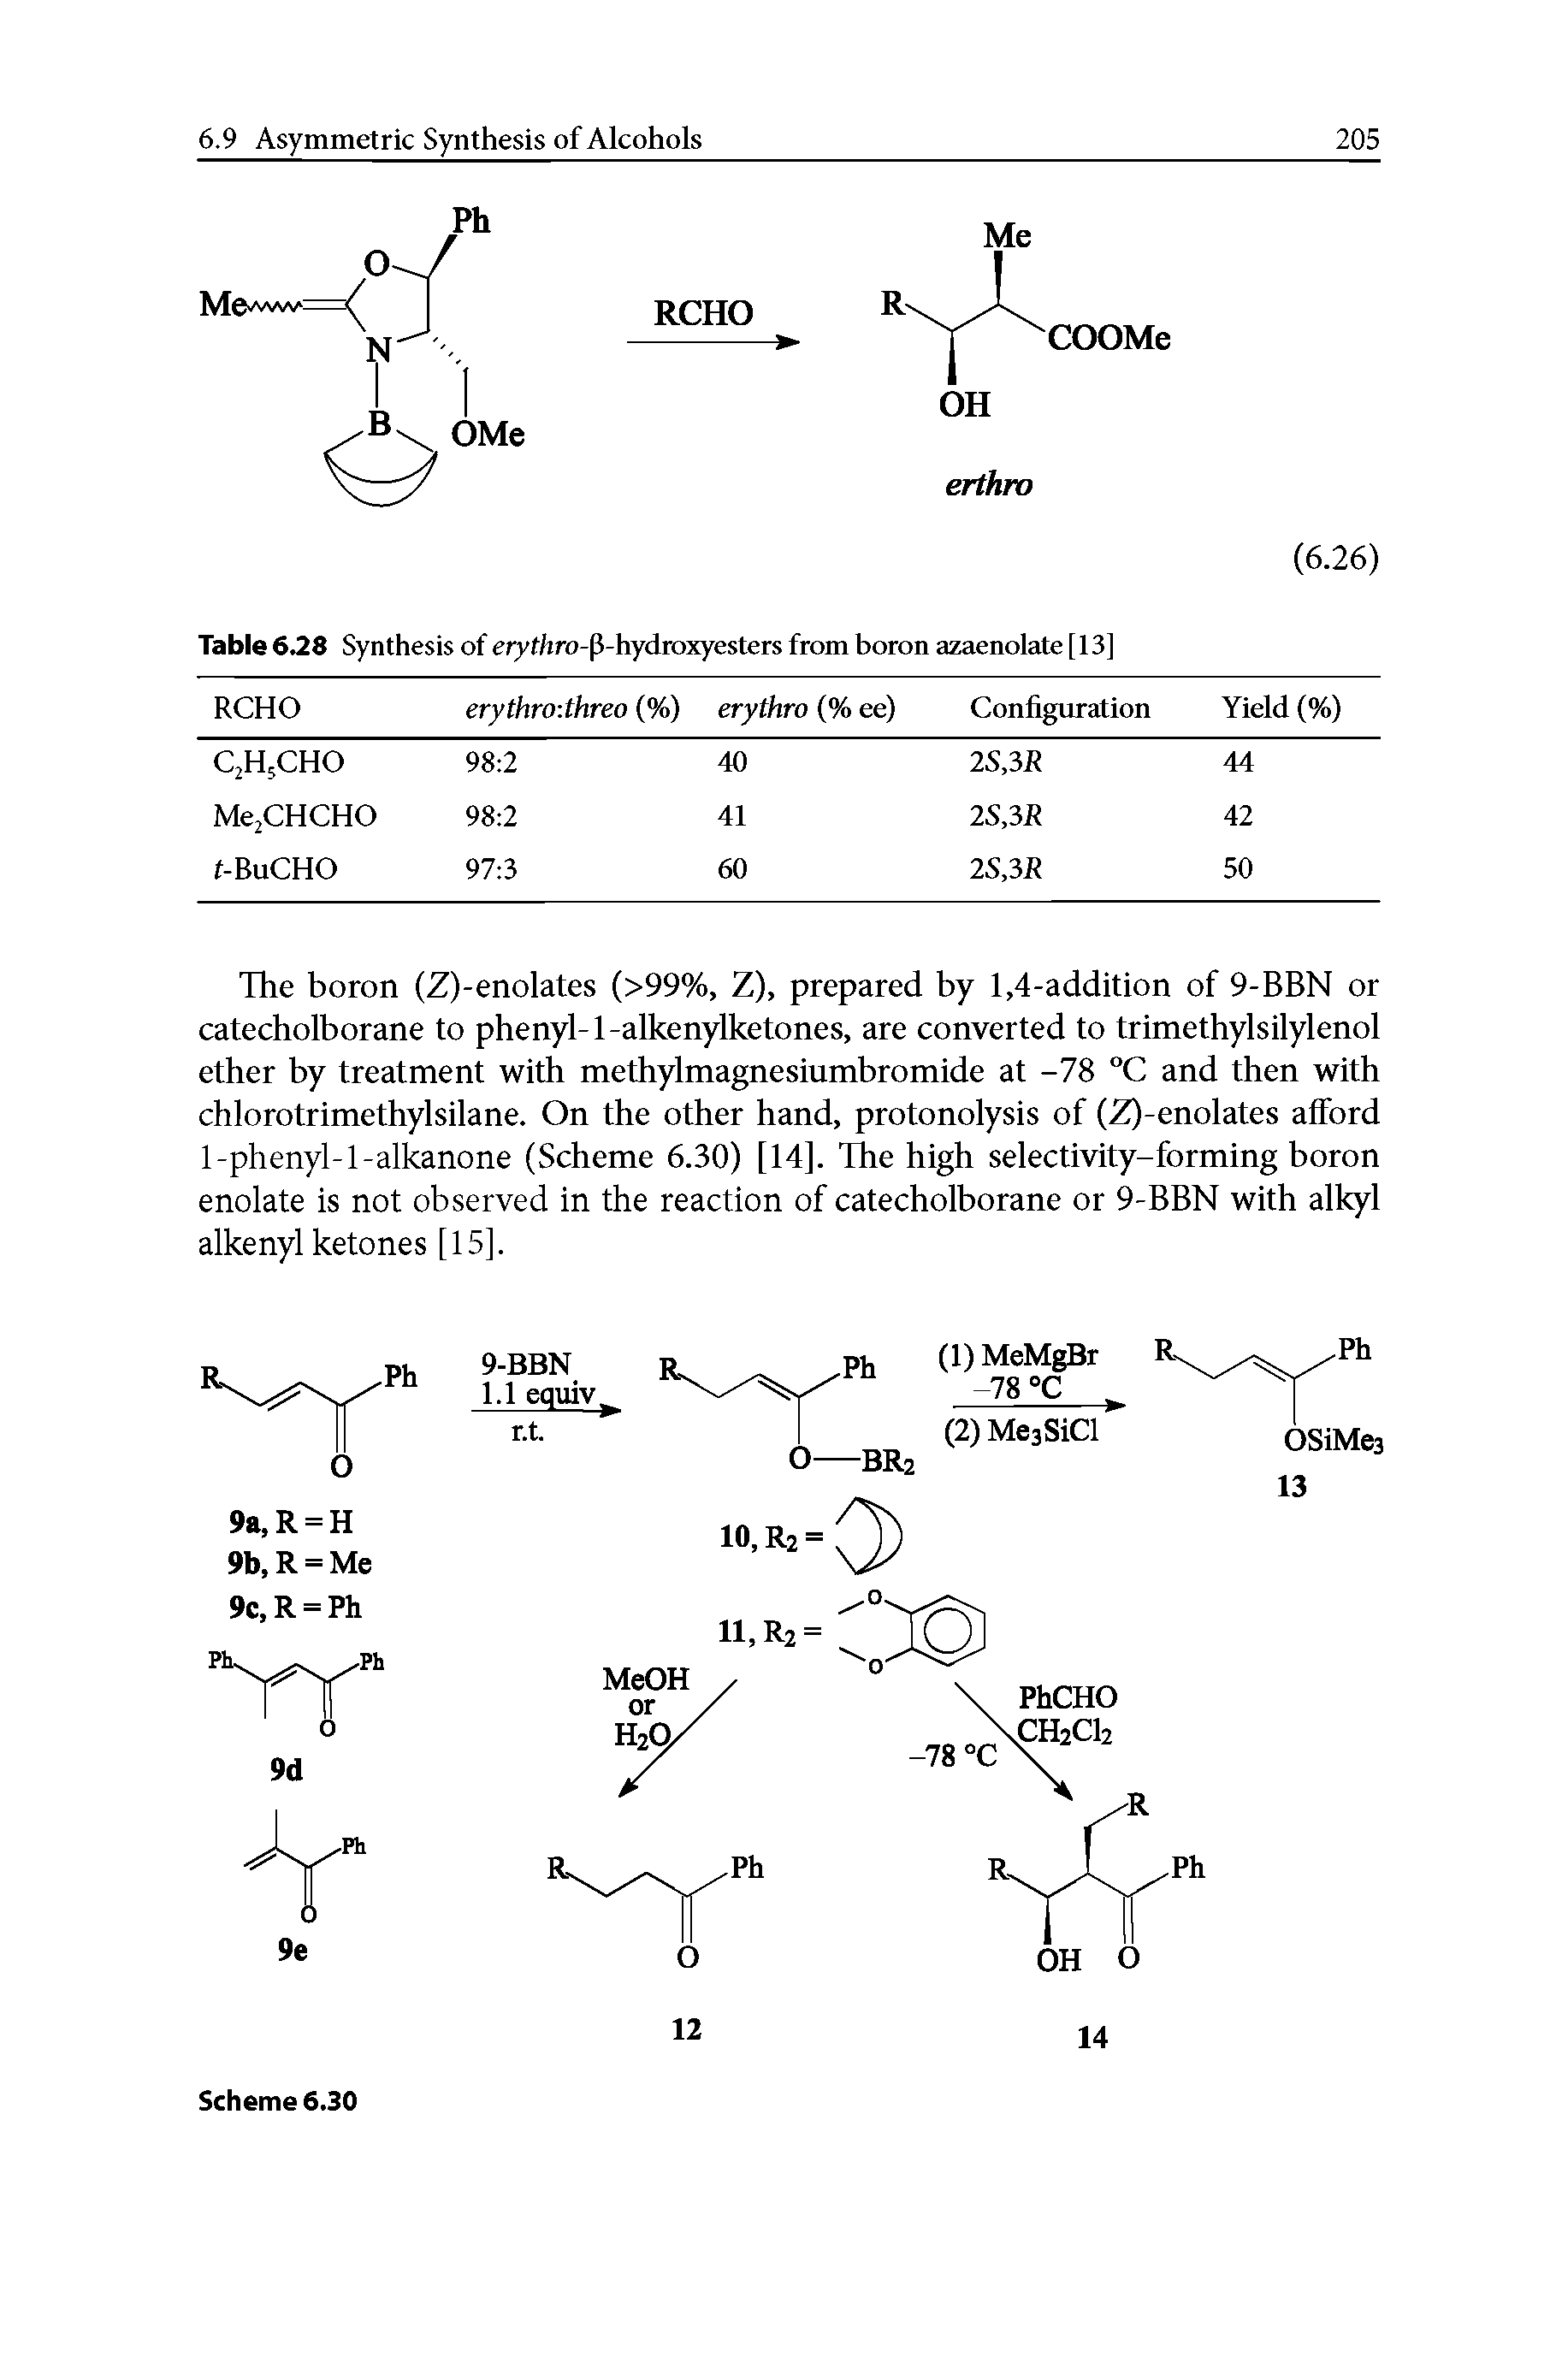 Table 6.28 Synthesis of e yf/iro-P-hydroxyesters from boron azaenolate [ 13]...